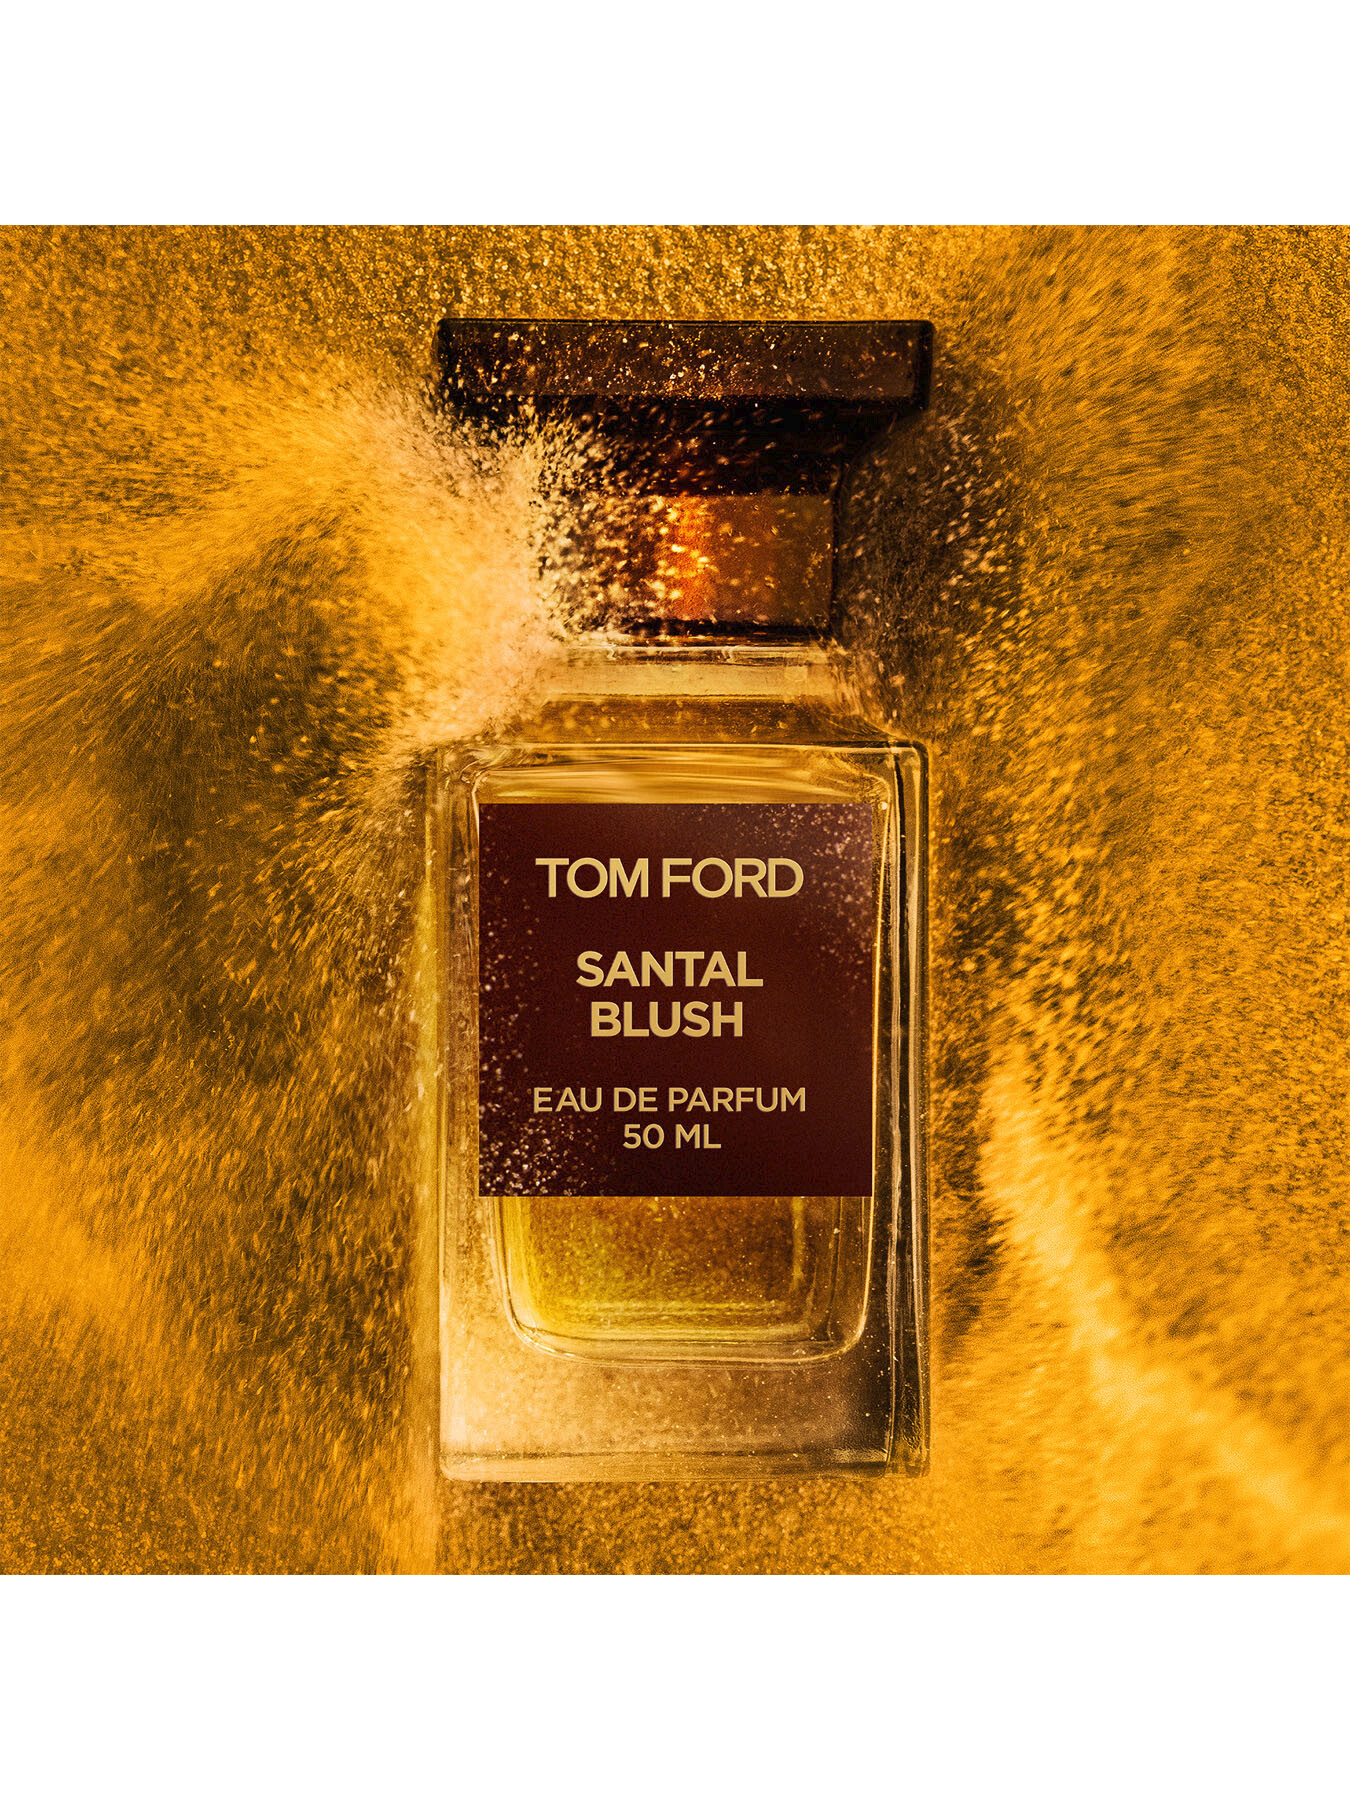 Tom Ford Santal Blush 50ml | Fenwick